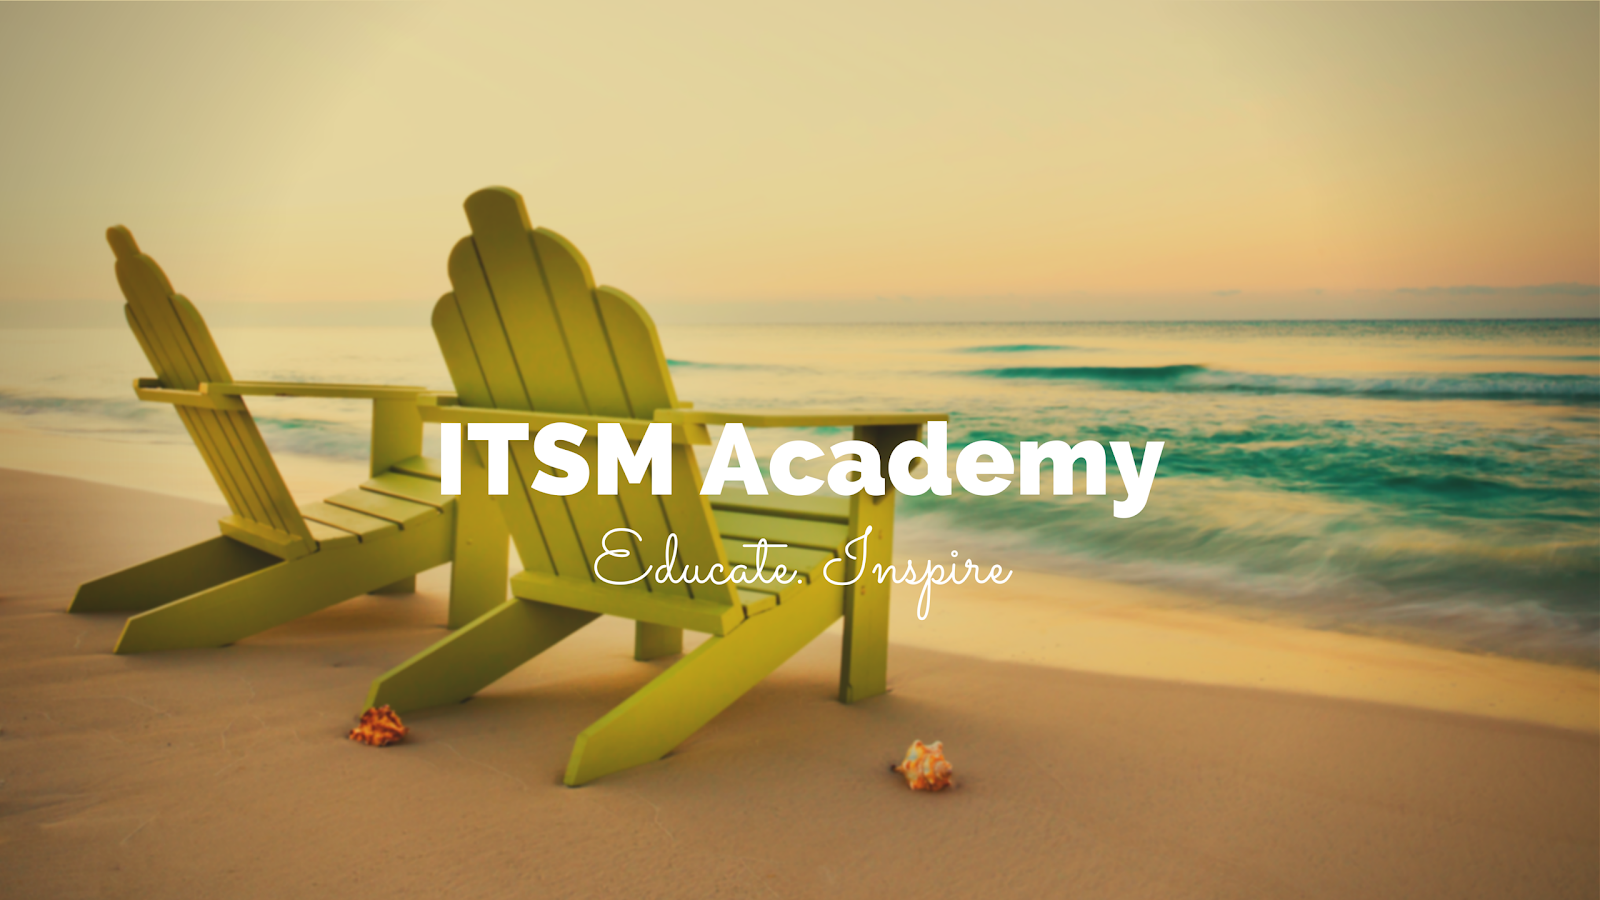 ITSM Academy Inc